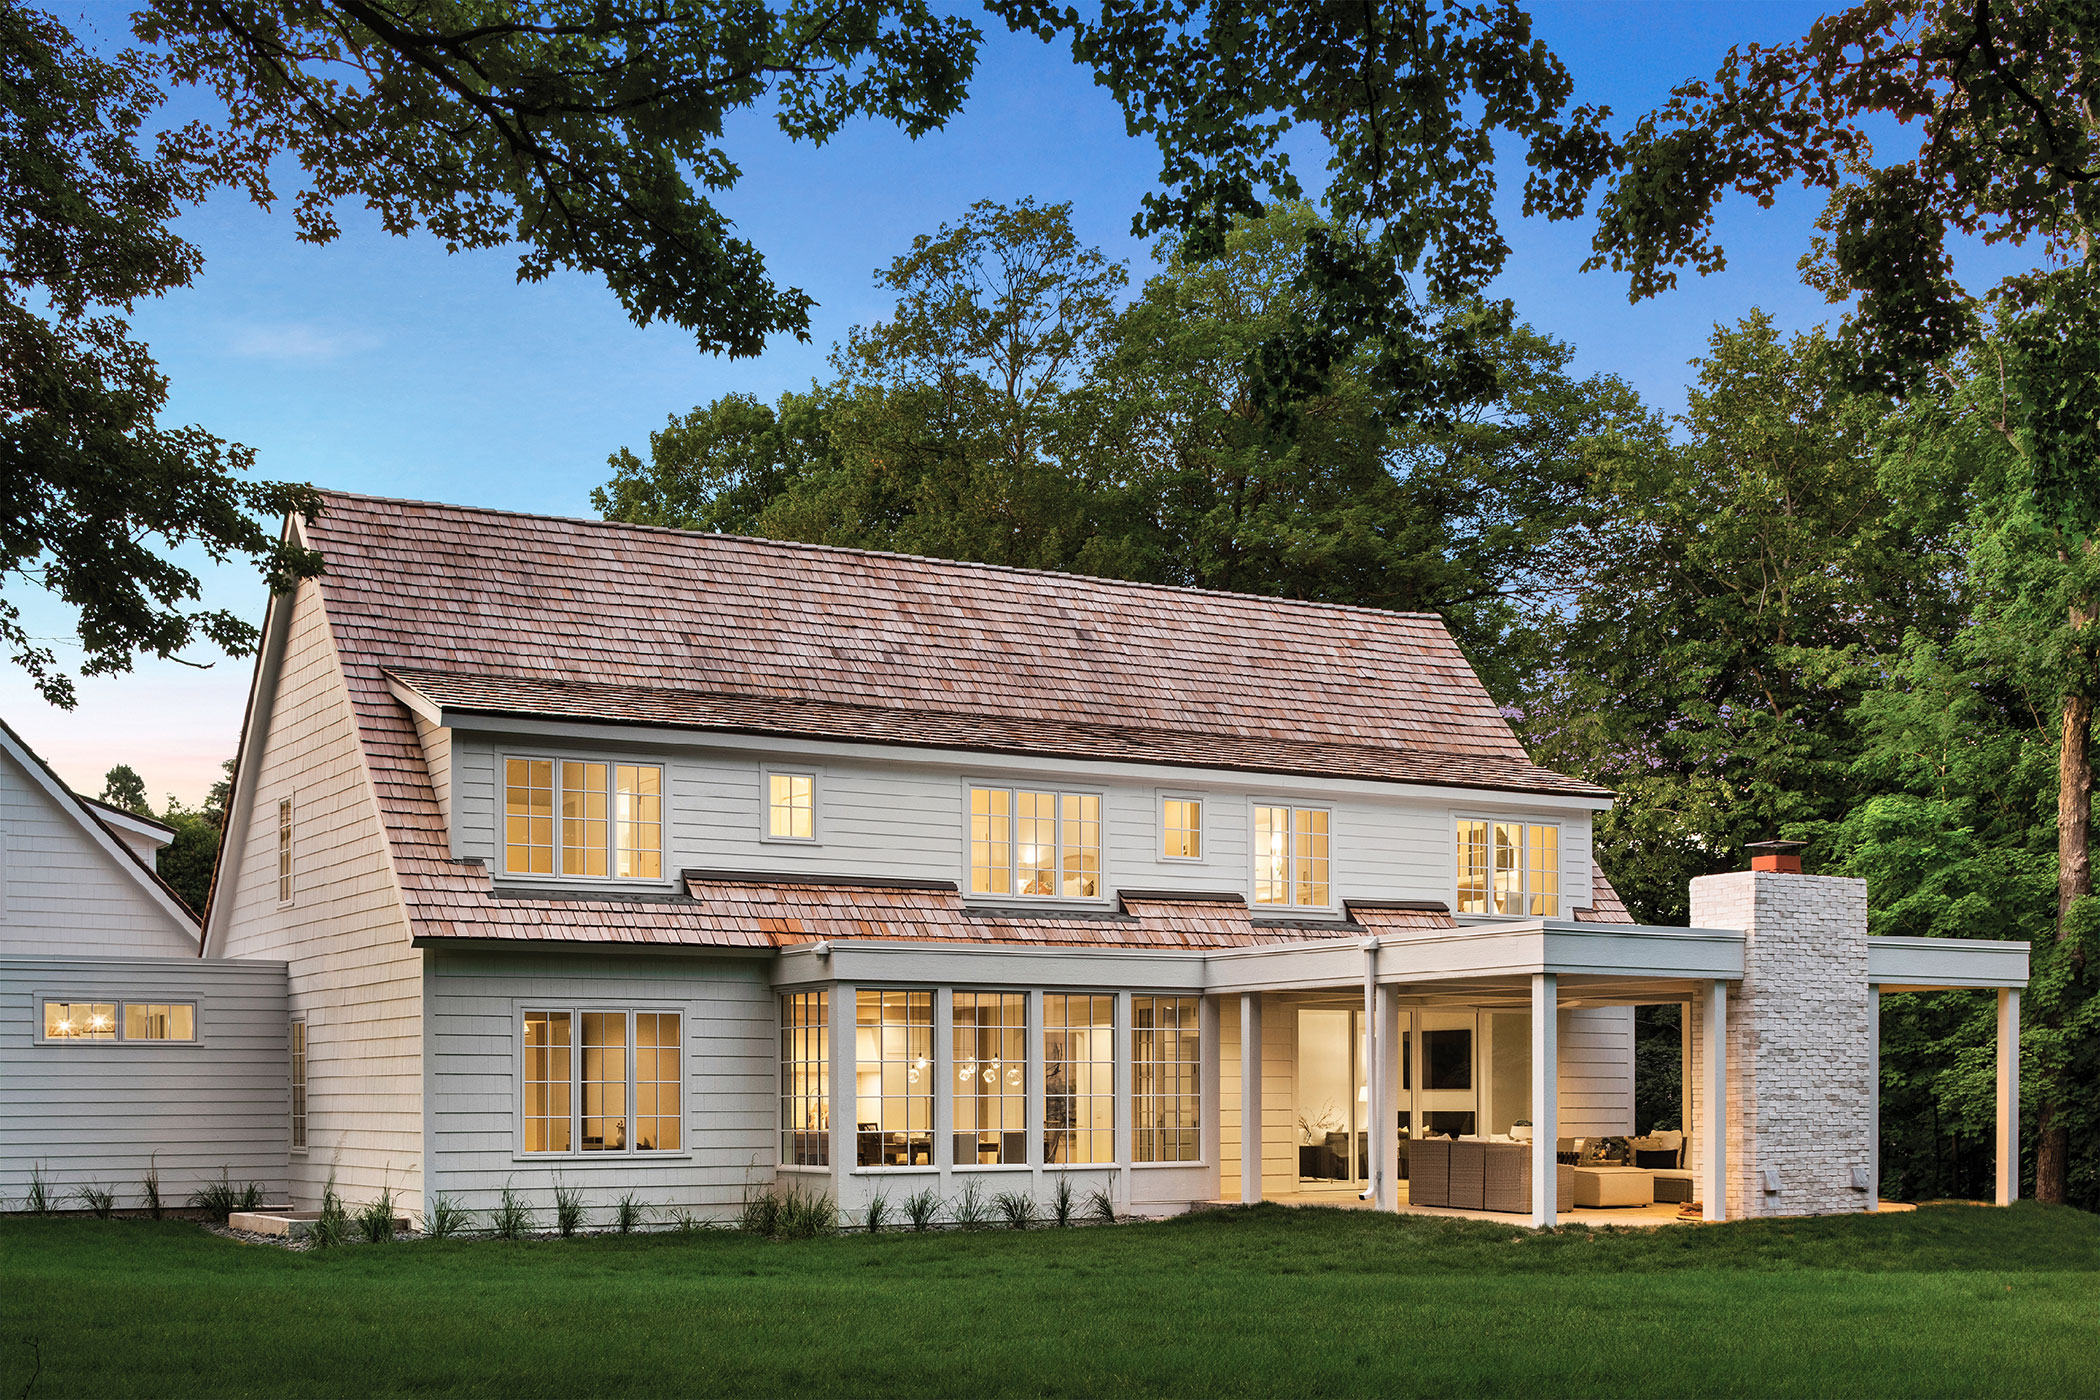 A farmhouse with new white clad windows